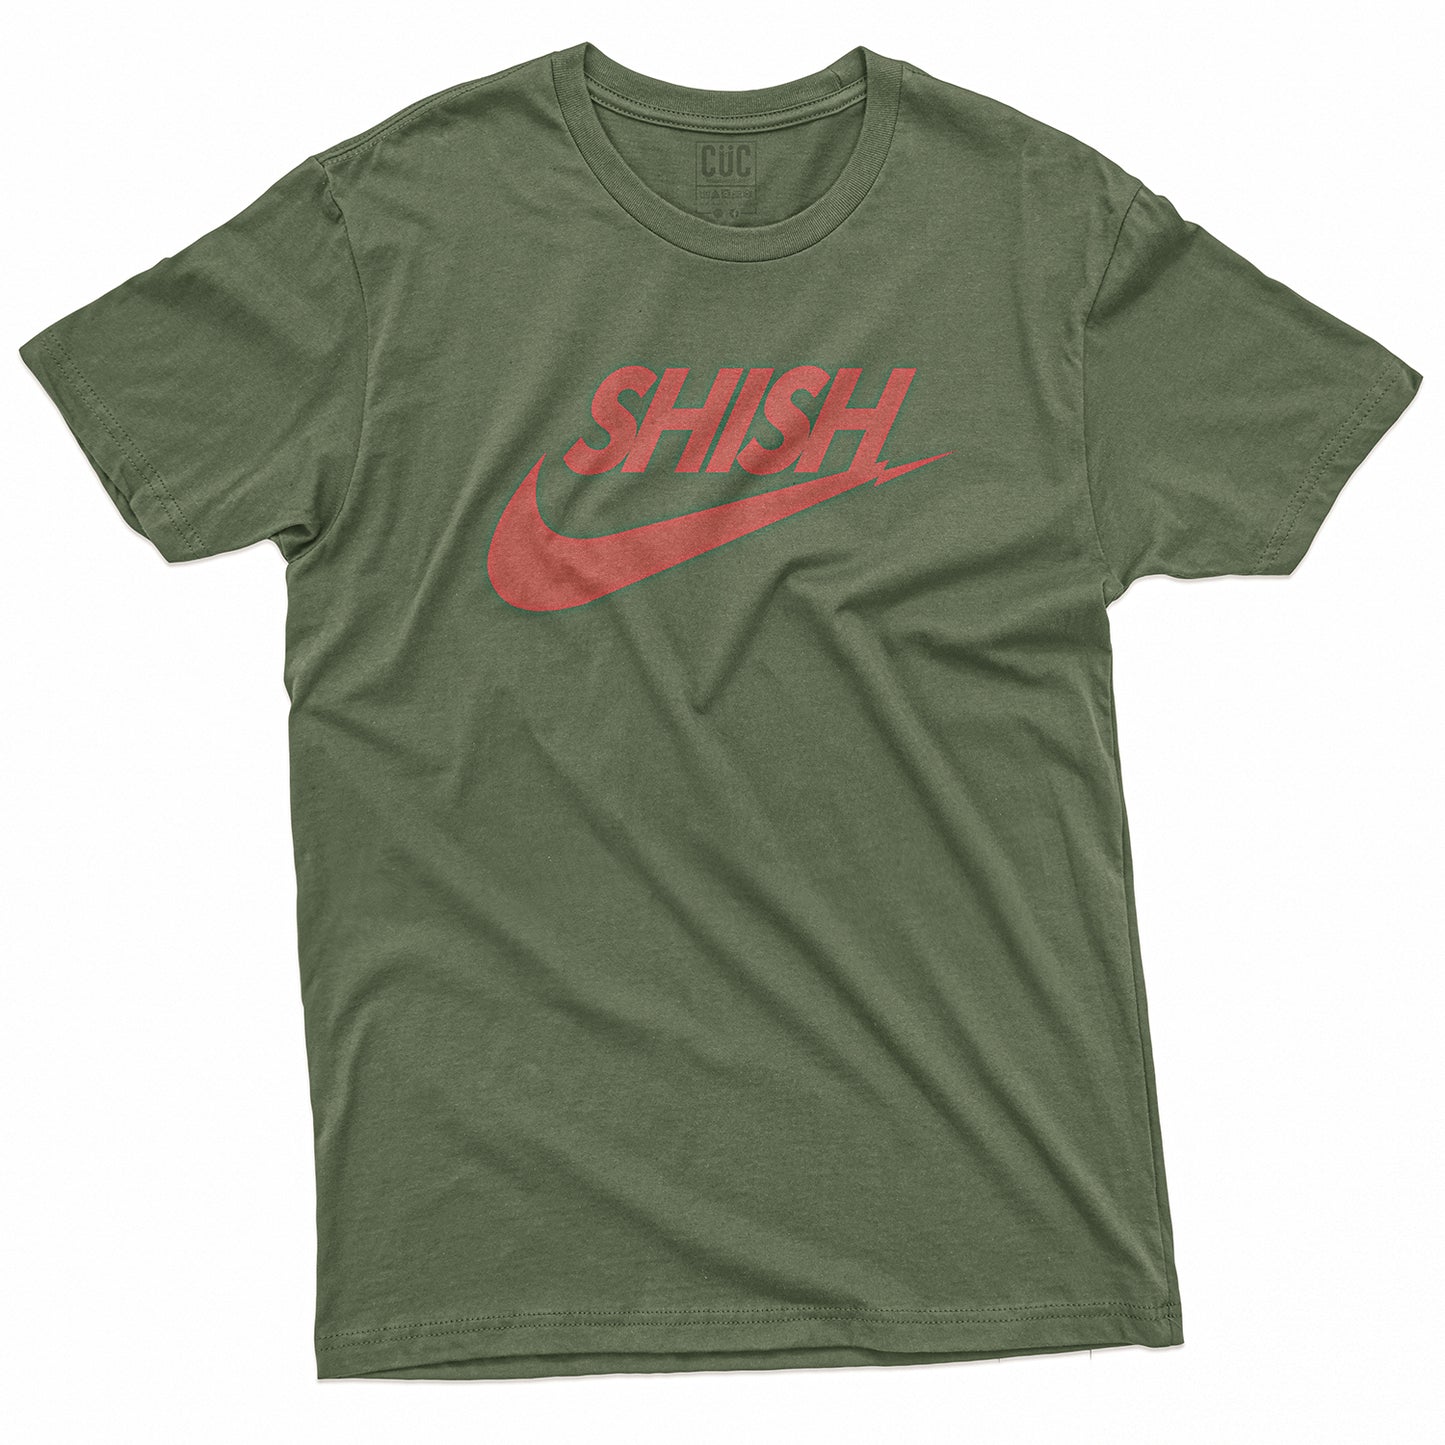 CUC T-Shirt  SHISH - Politici Poliglotti - Divertente  #chooseurcolor